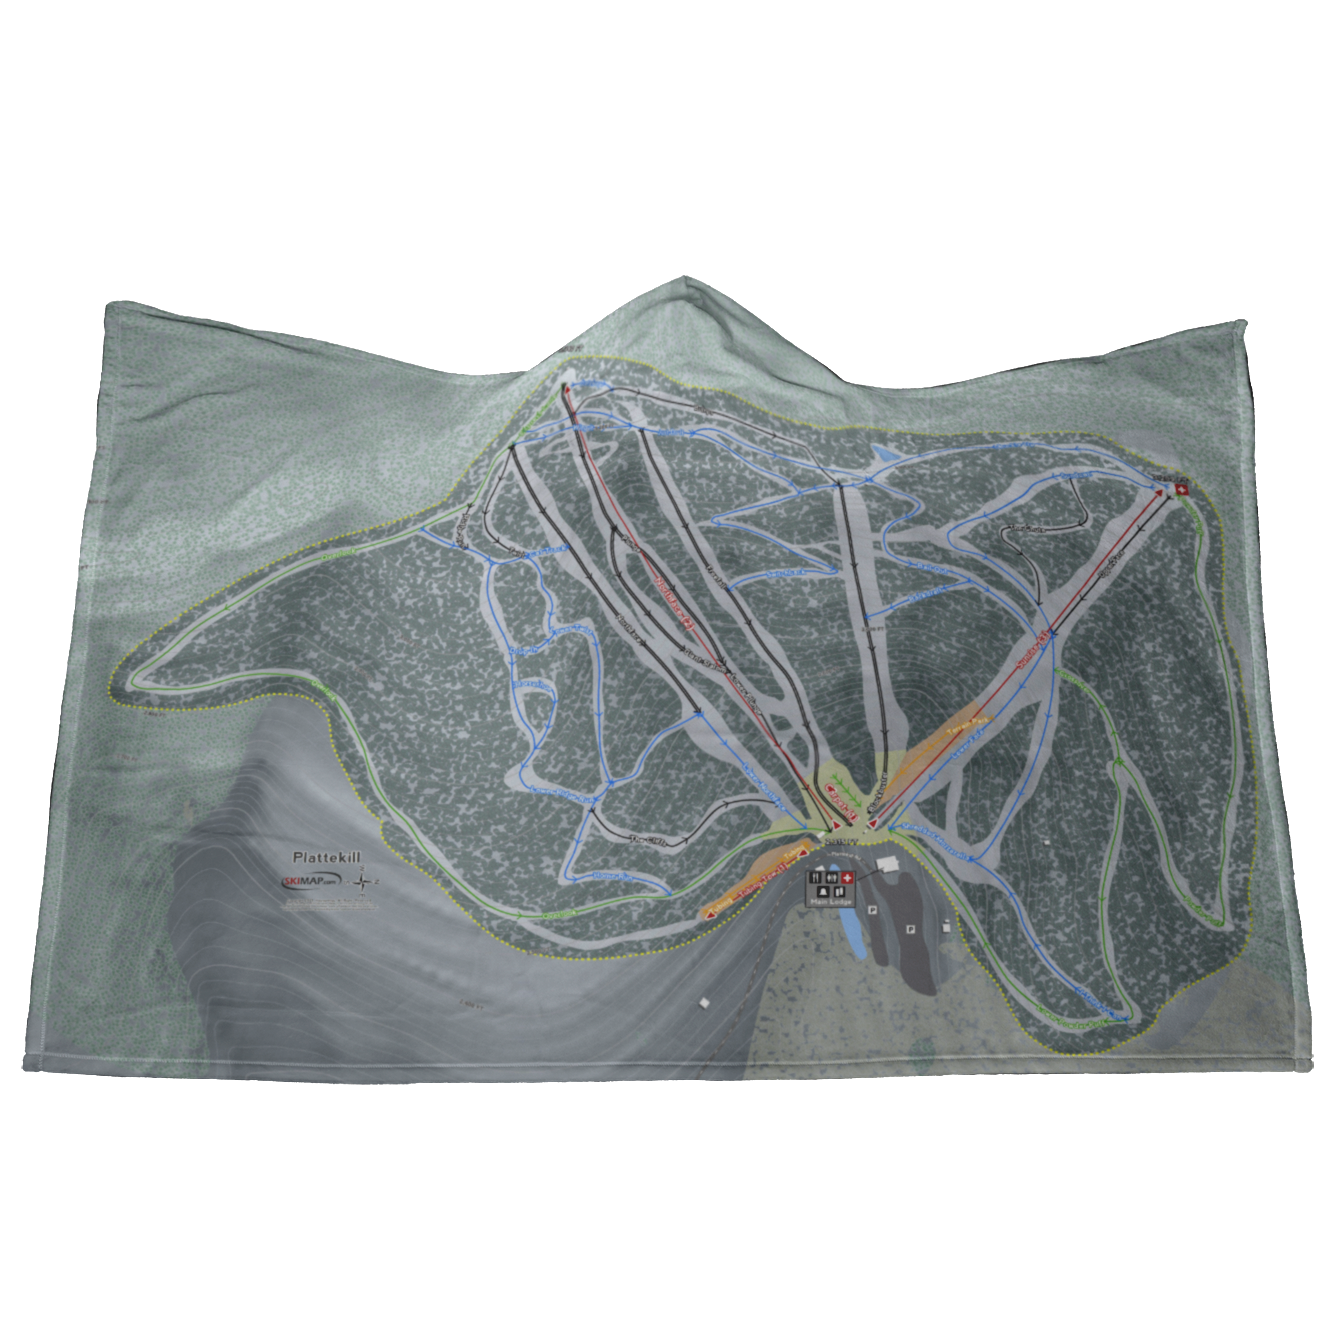 Plattekill, New York Ski Trail Map - Hooded Blanket - Powderaddicts